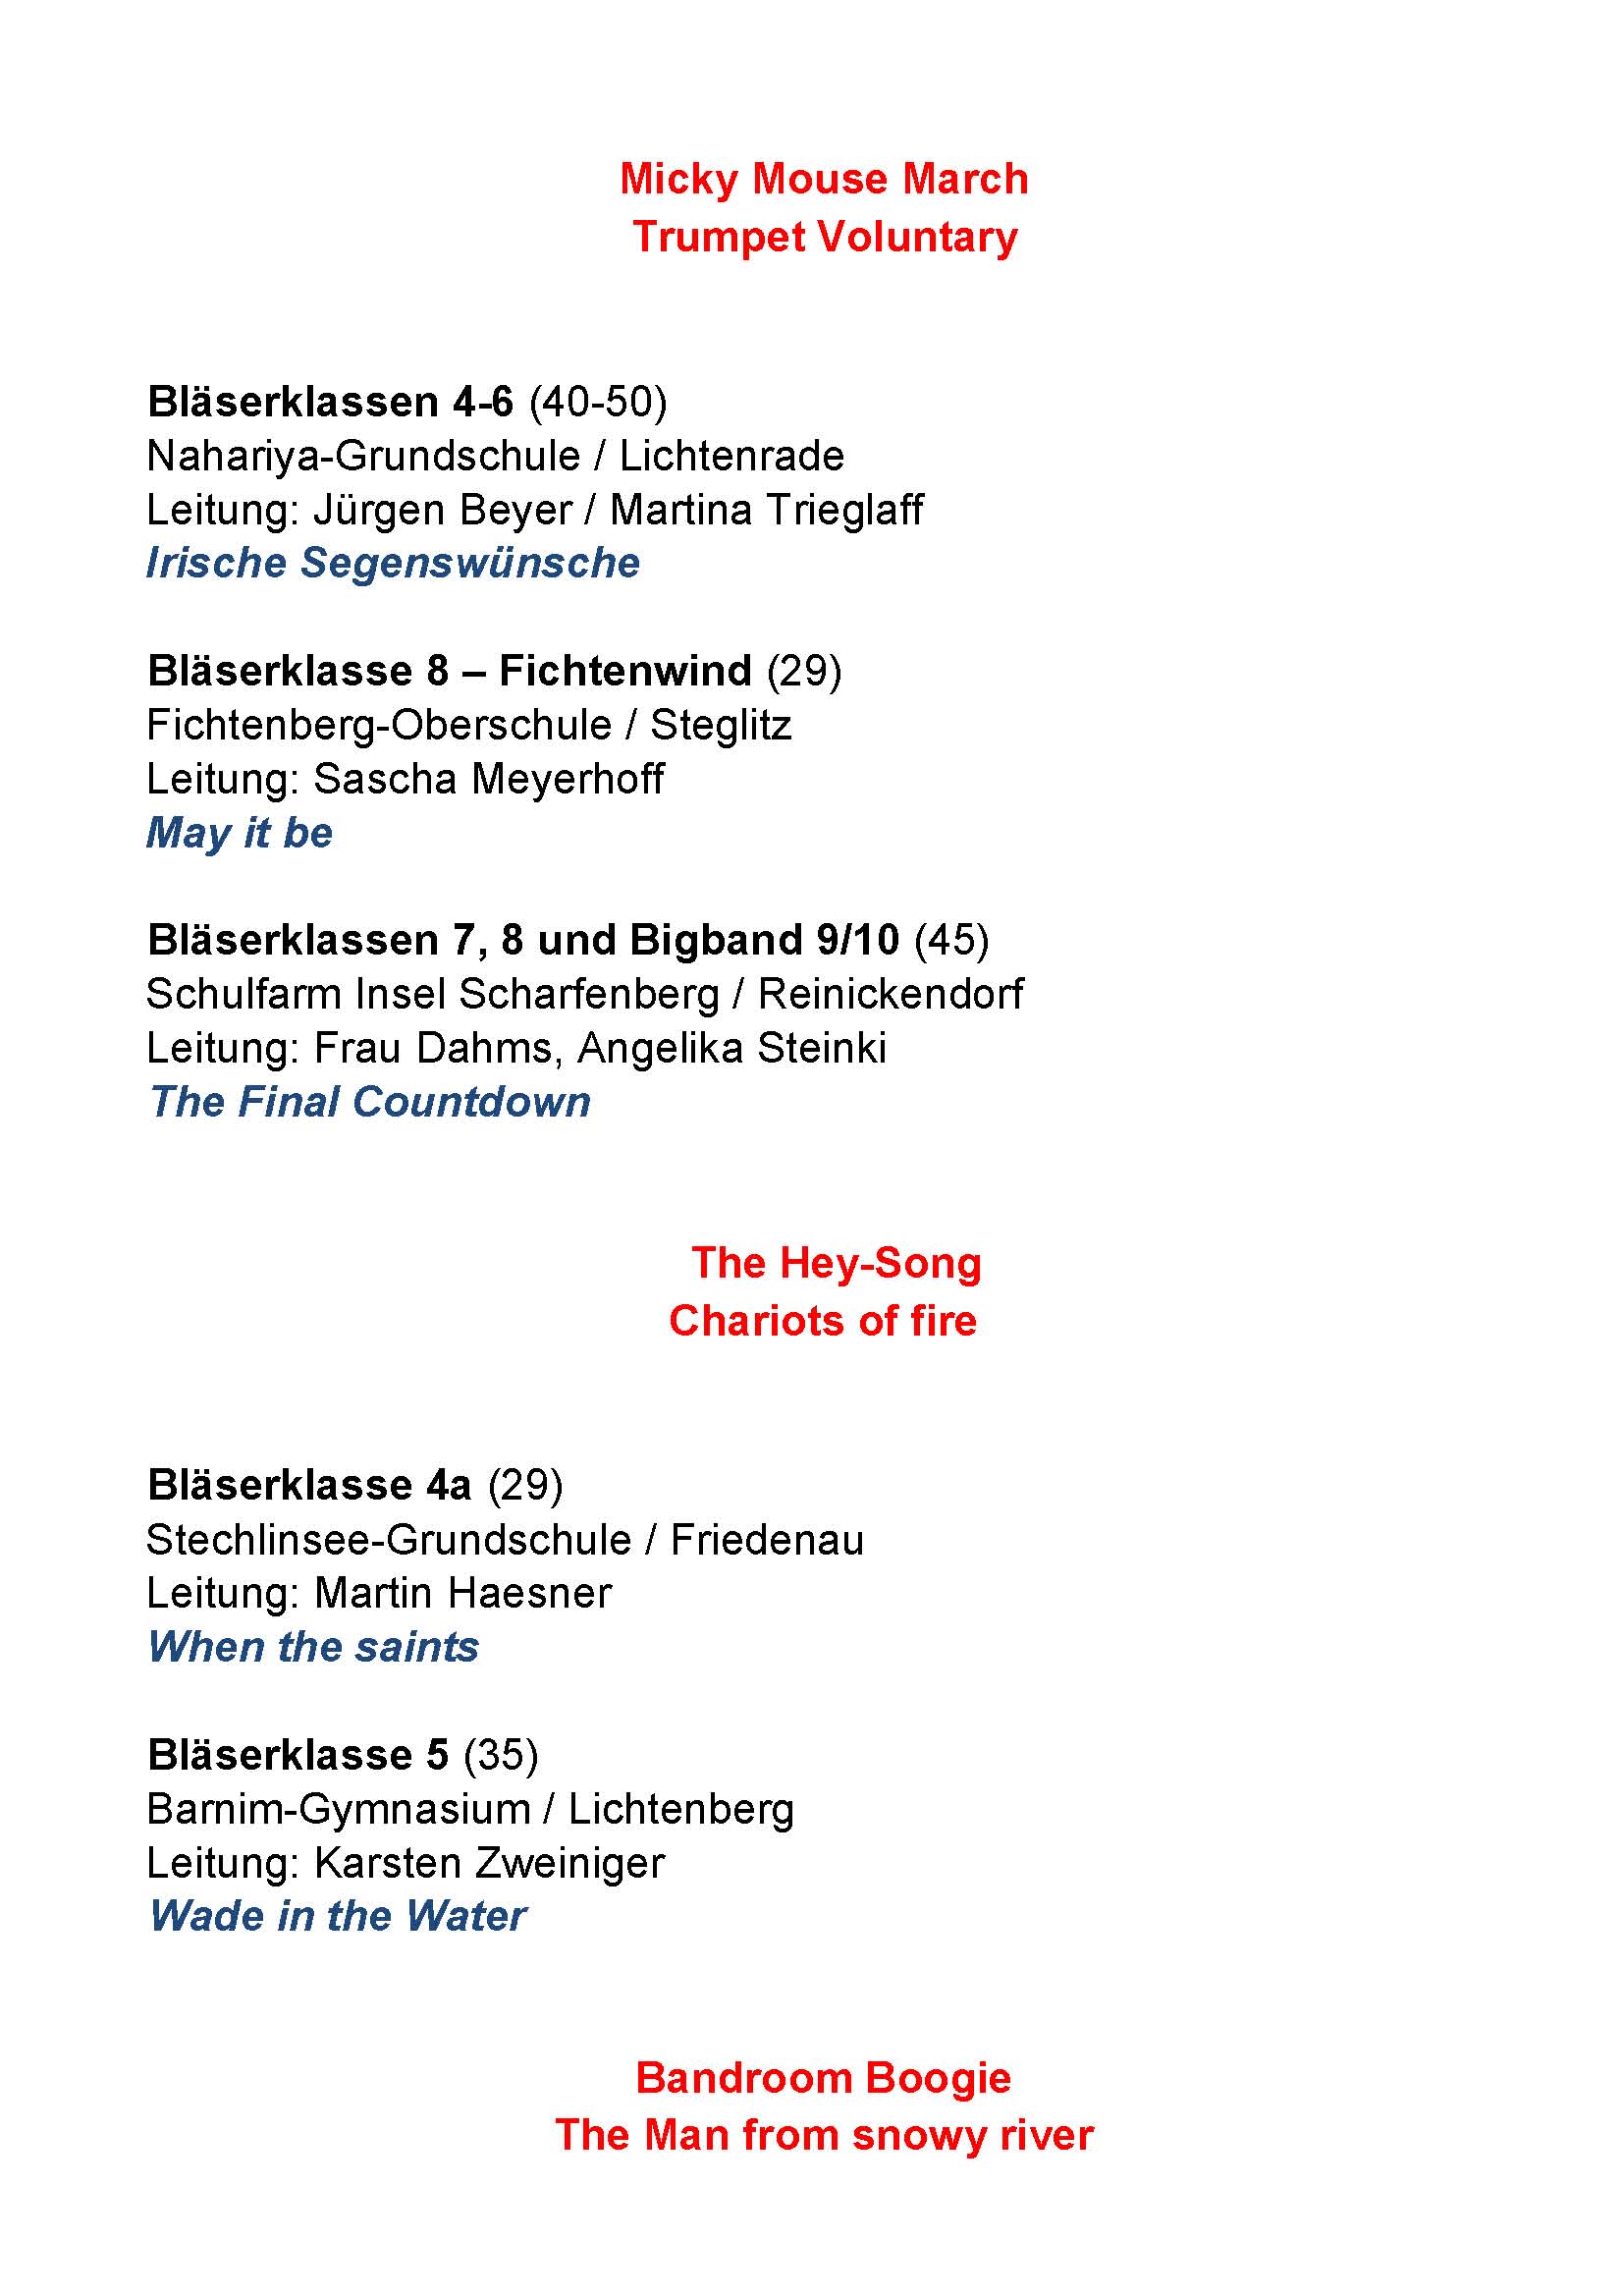 Programm Berliner Bläserklassenfestival 2015 Seite 2